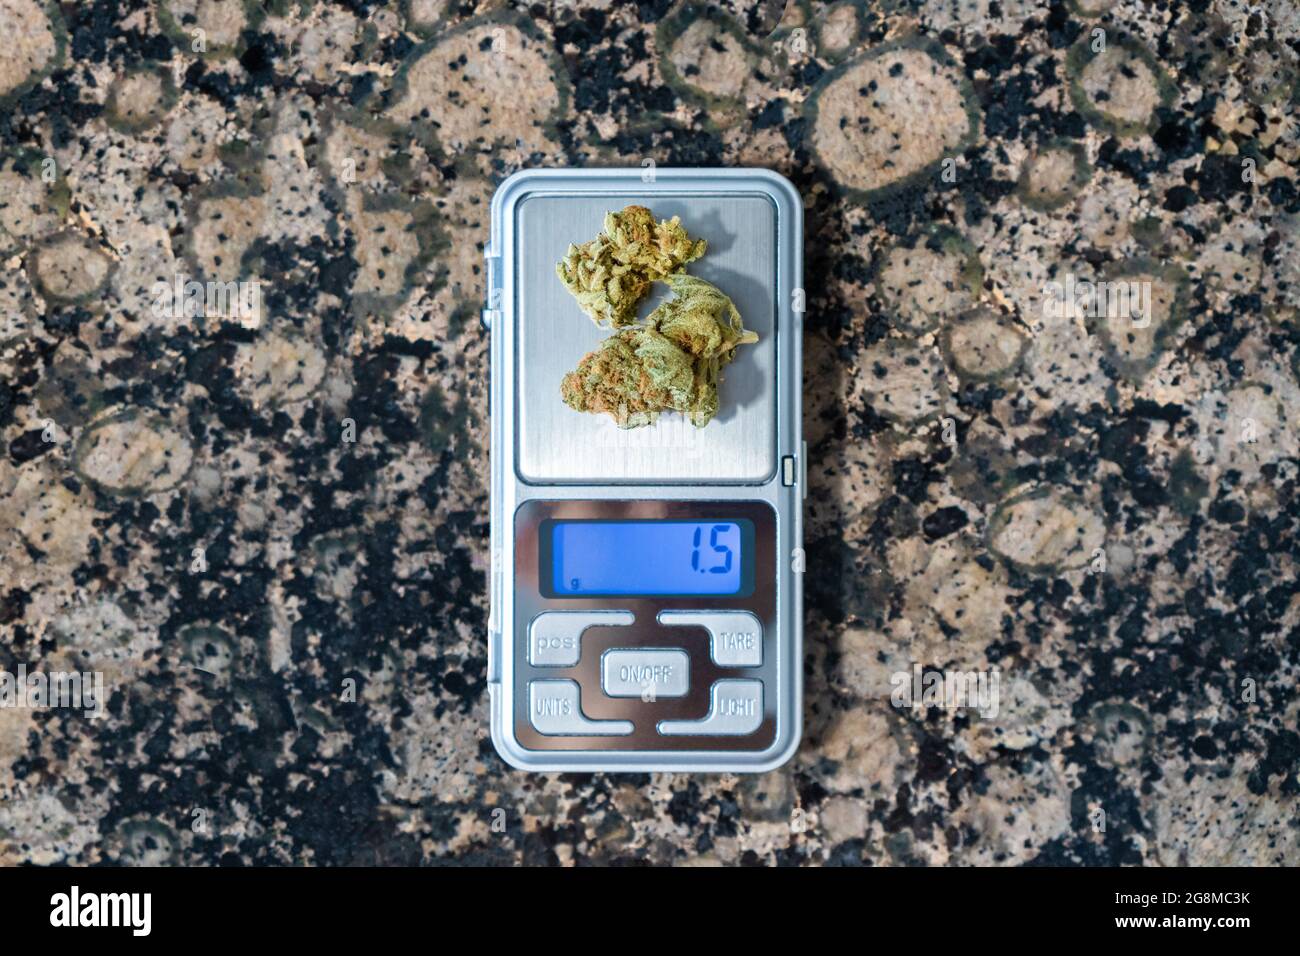 https://c8.alamy.com/comp/2G8MC3K/weighing-the-dose-of-marijuana-using-a-digital-scale-on-a-marble-table-2G8MC3K.jpg